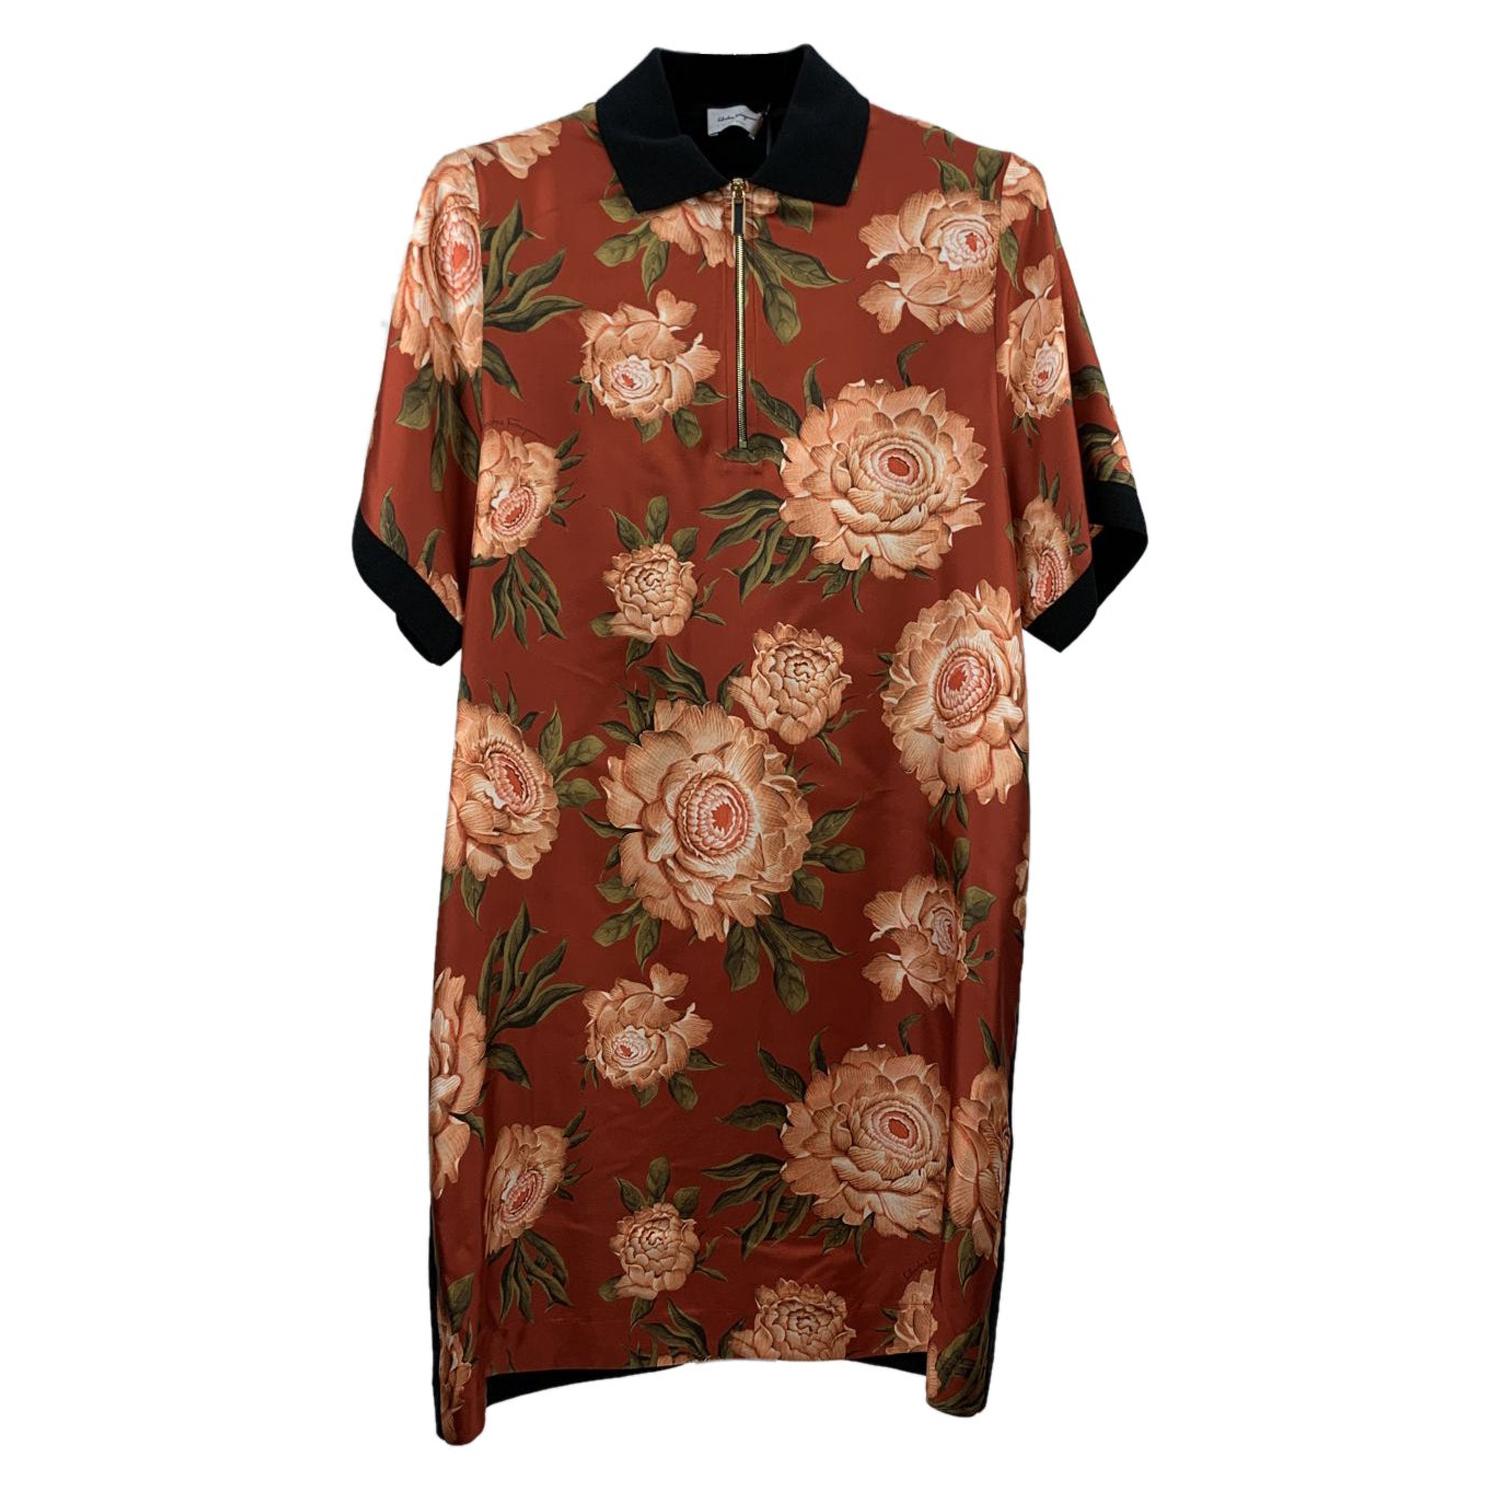 Salvatore Ferragamo Floral Silk and Cotton T-Shirt Dress Size 40 IT